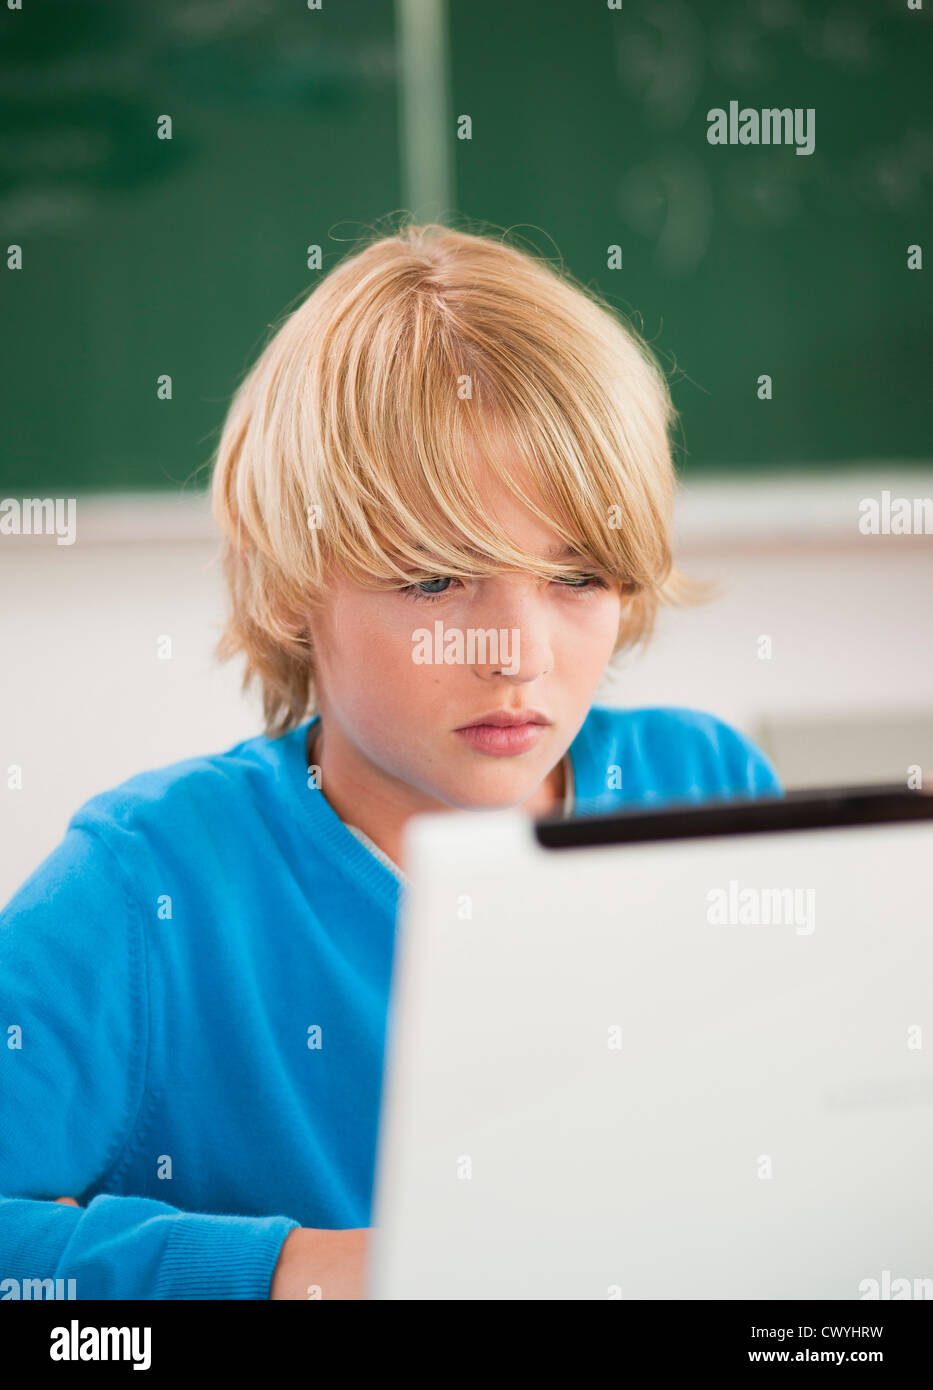 Schoolboy using laptop in classroom Stock Photo